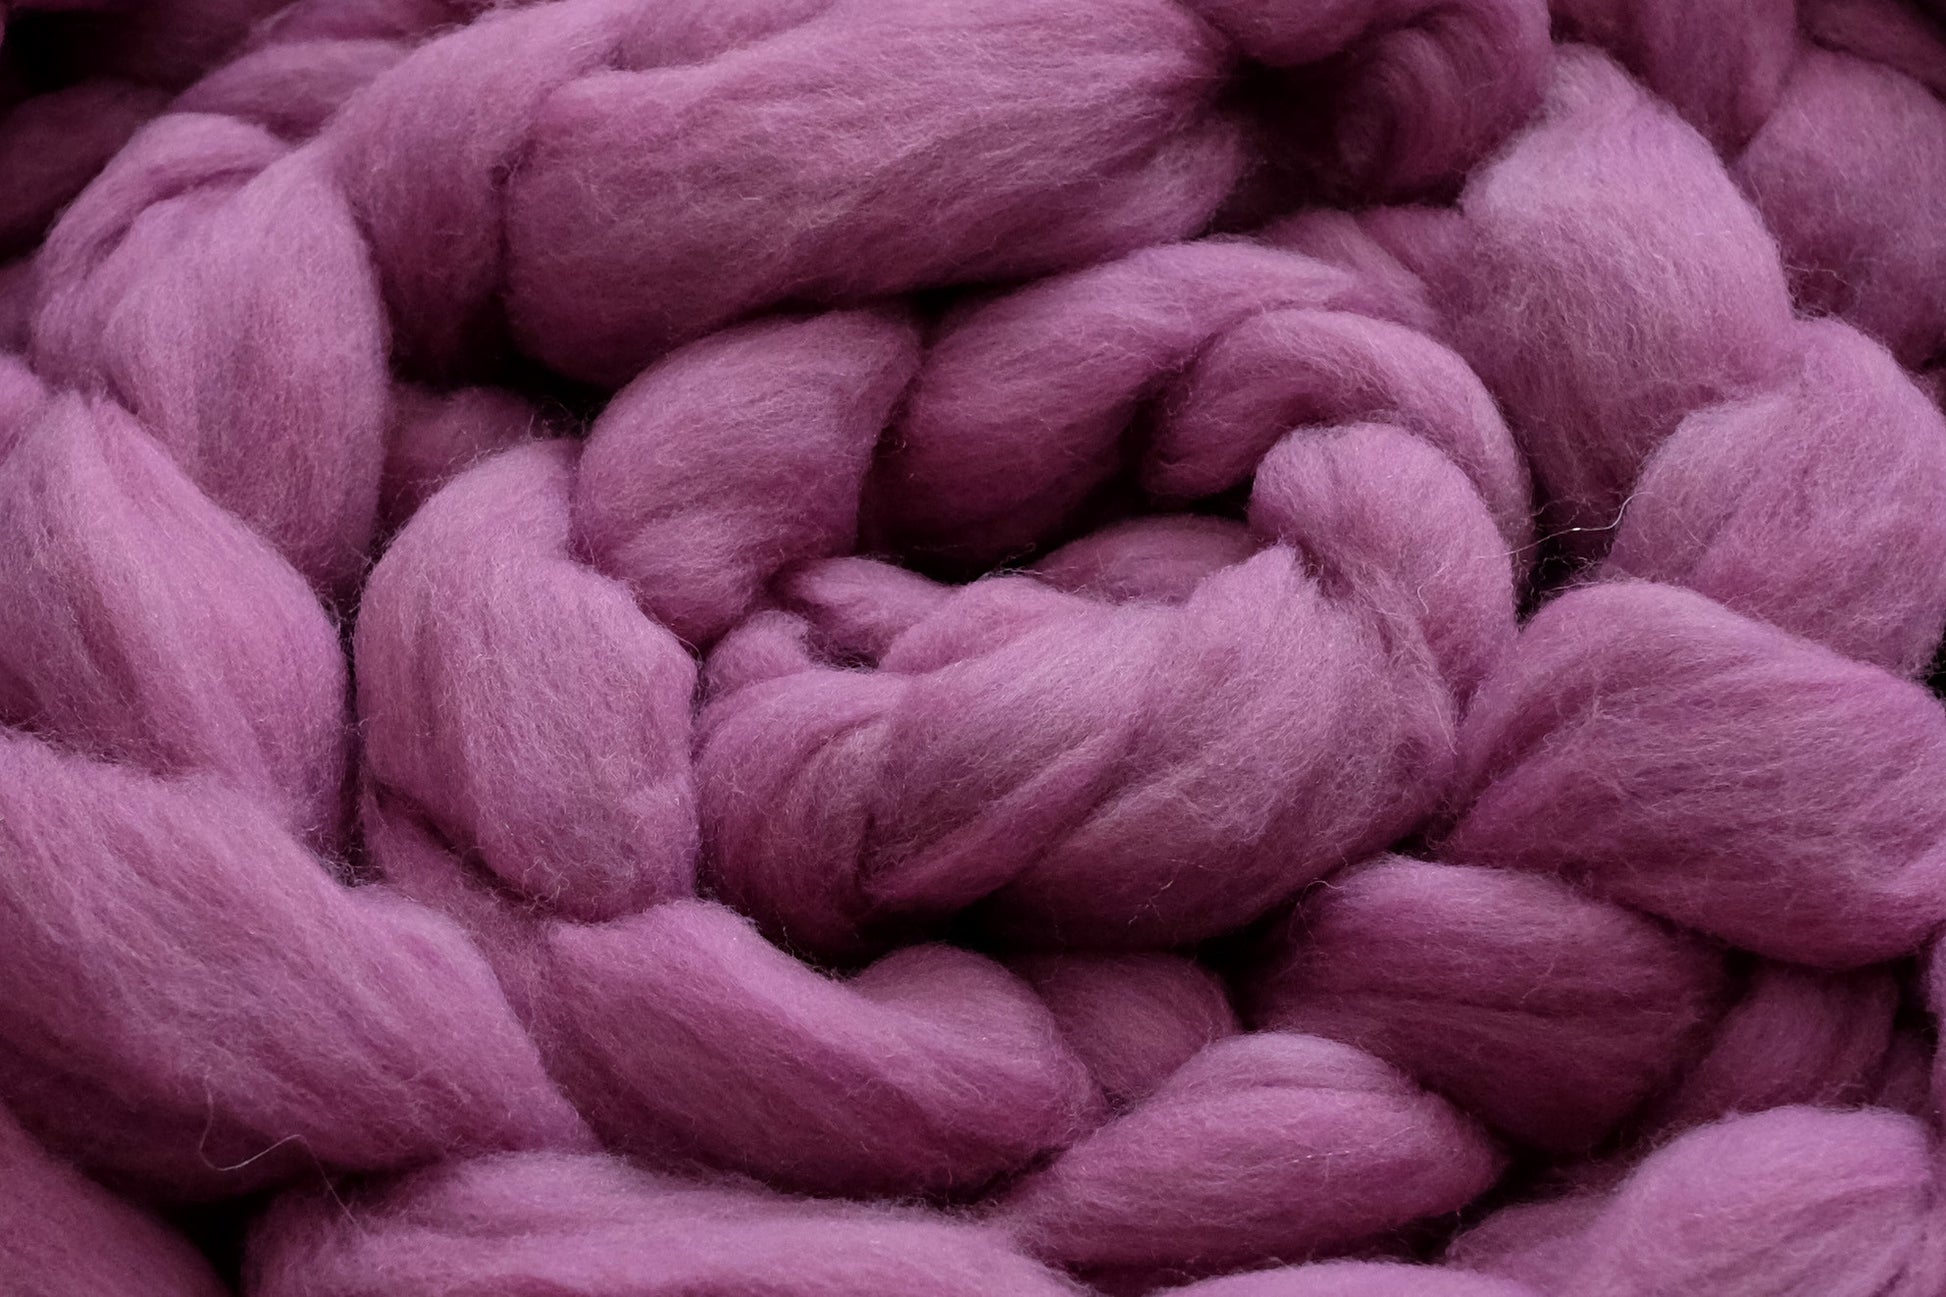 Wool Braid - Purple-Newborn Photography Props